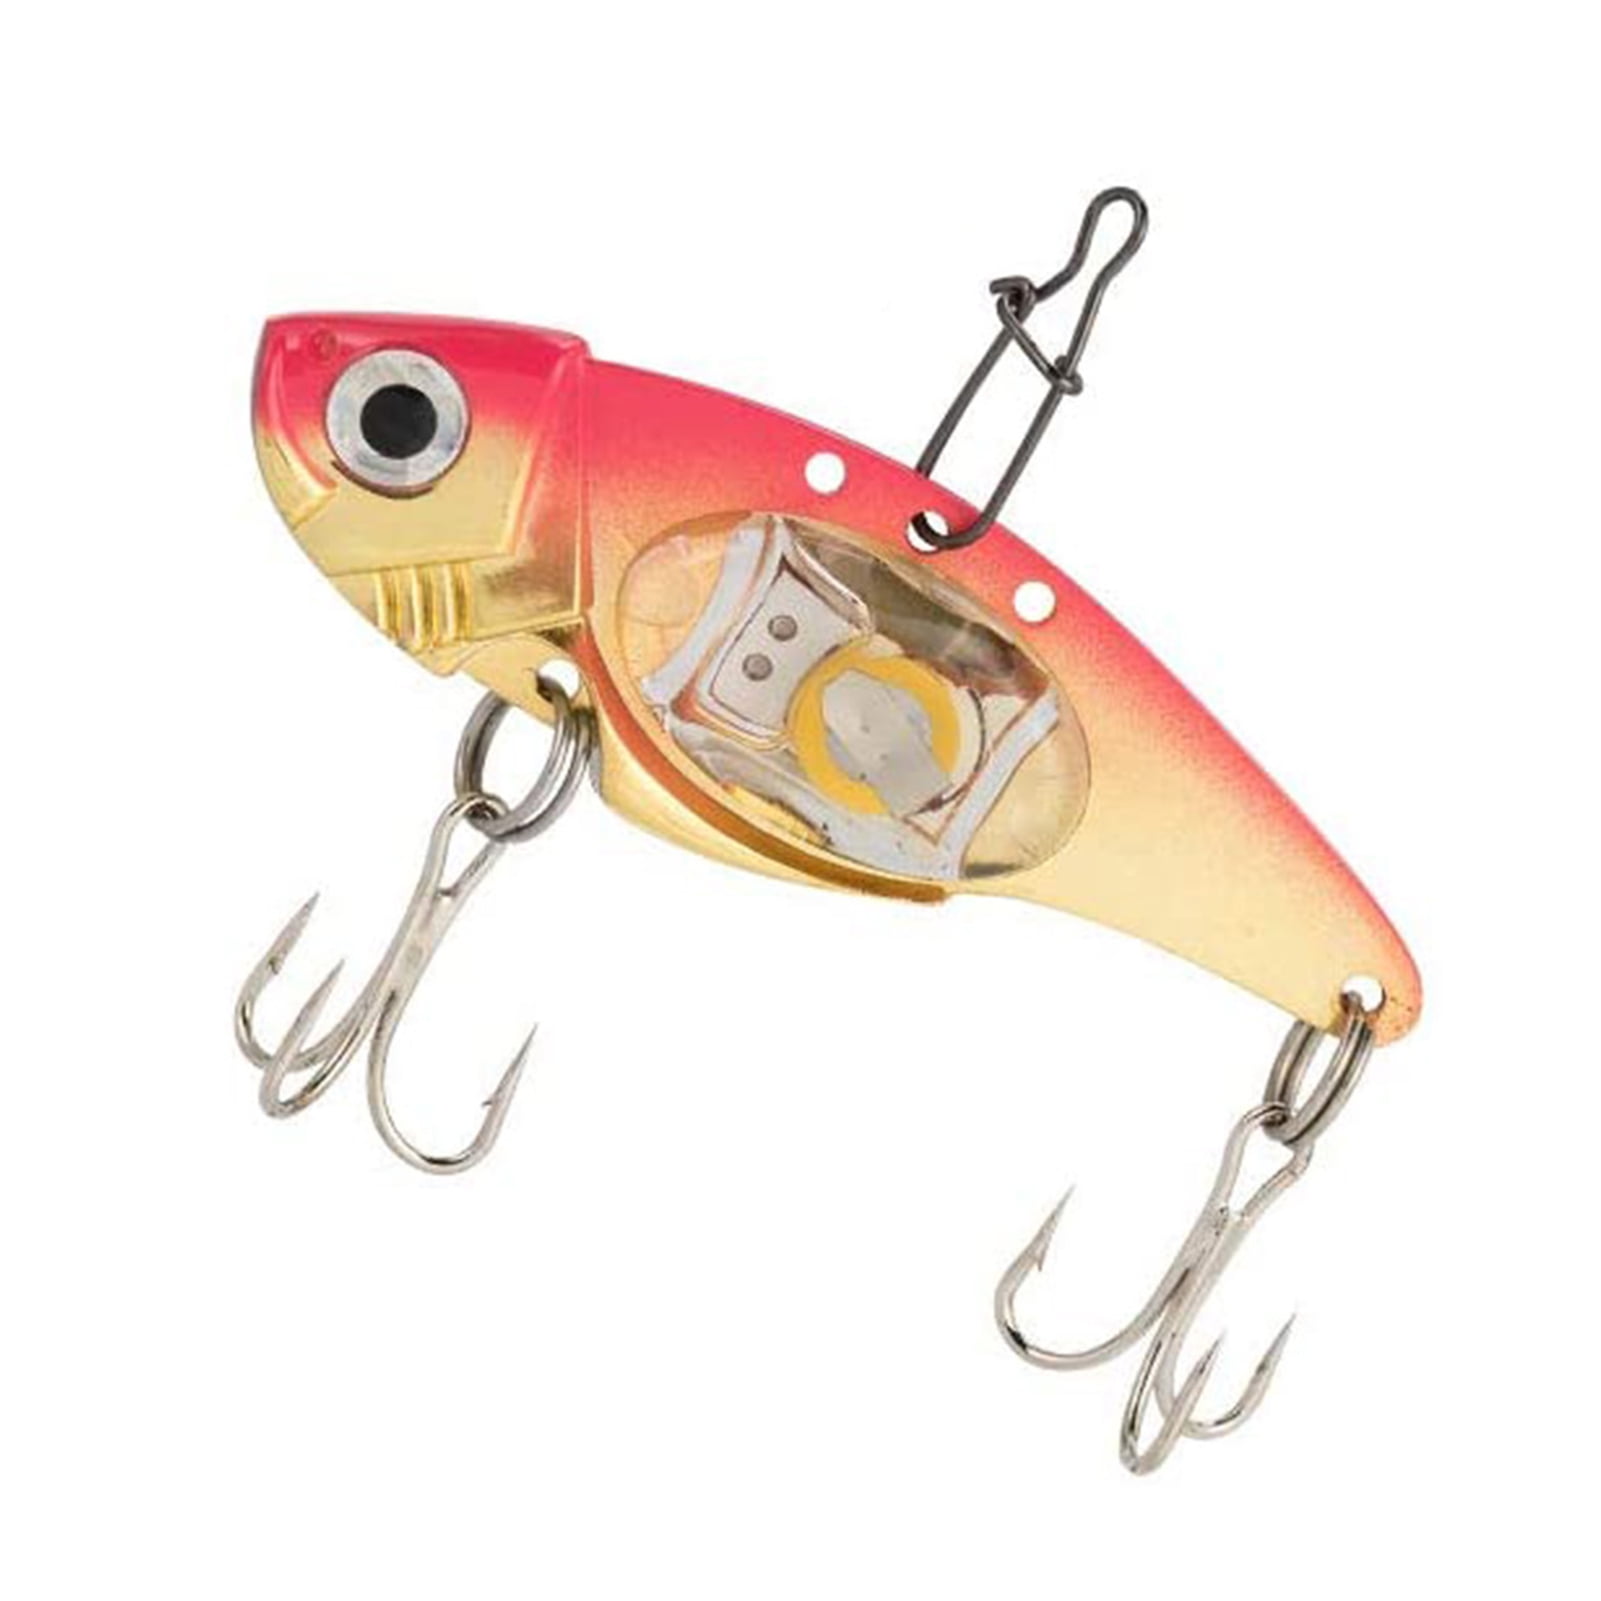 Wholesale led mini fishing light for A Different Fishing